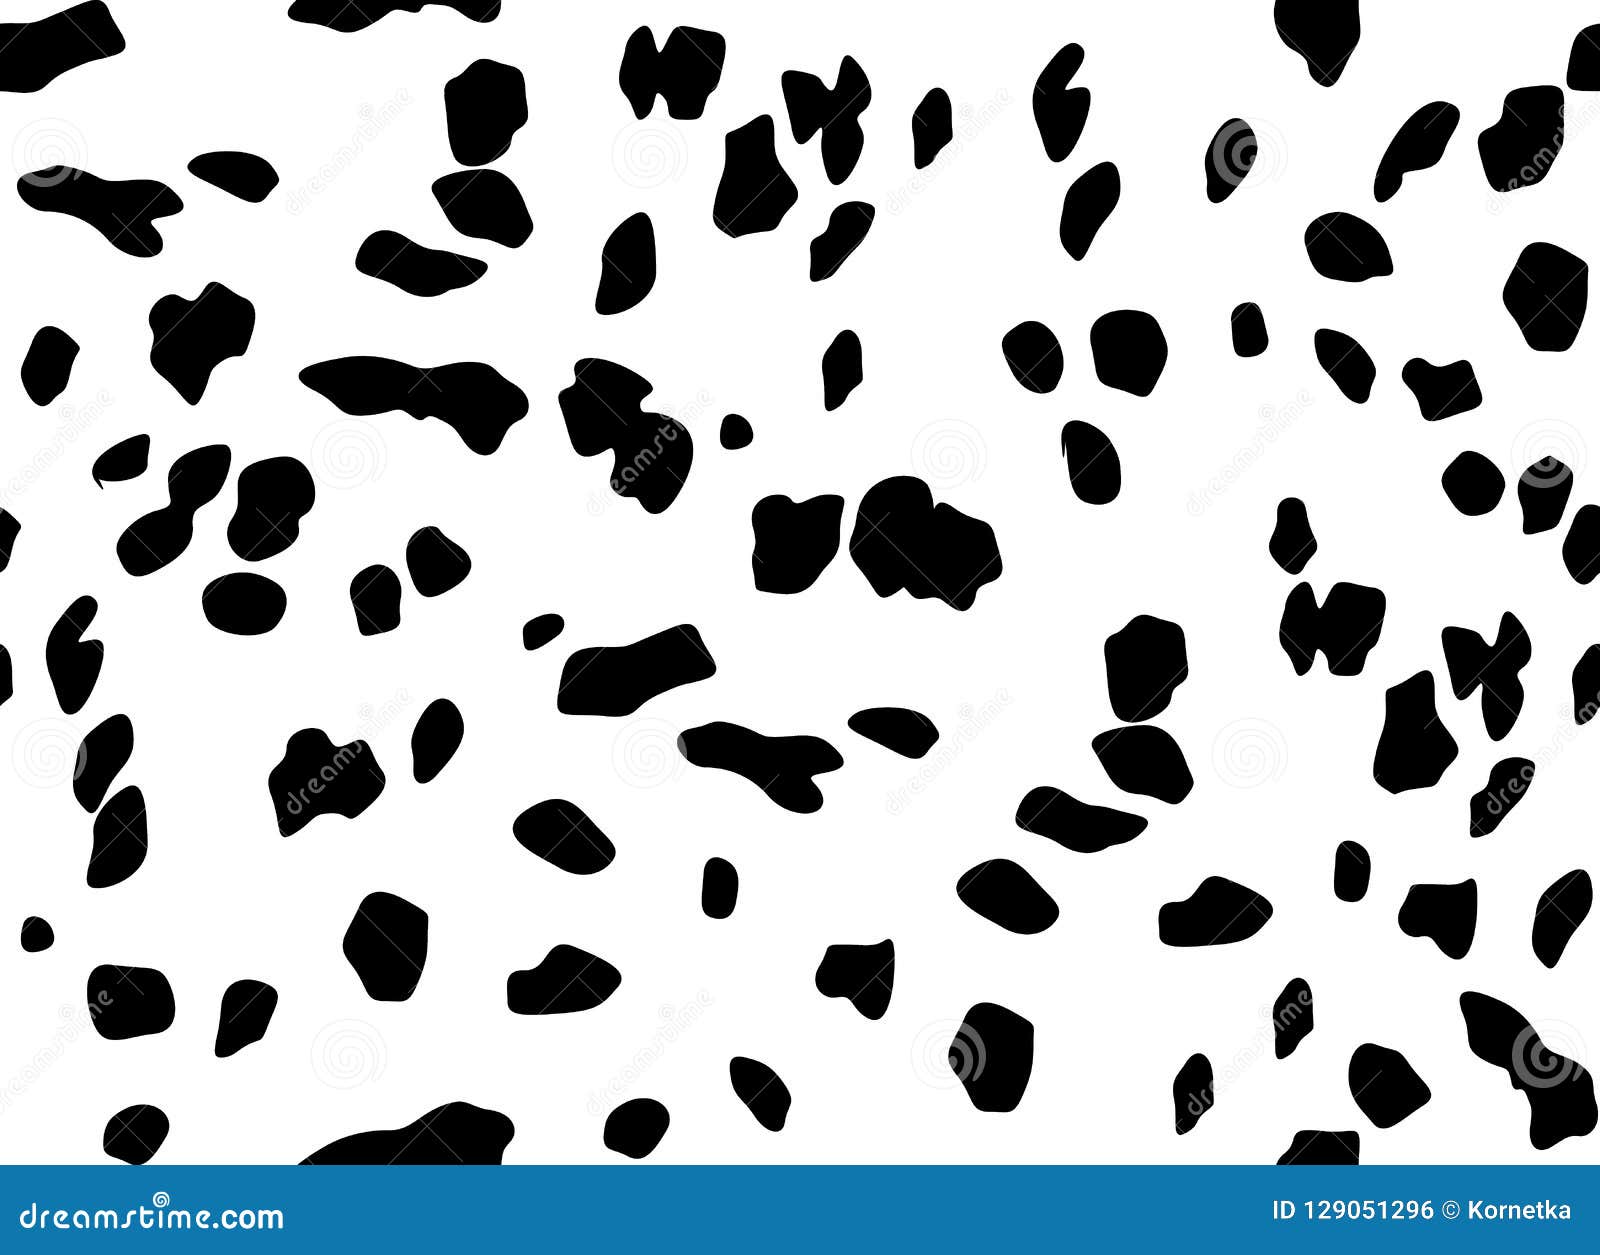 Seamless pattern of dalmatian spots Royalty Free Vector